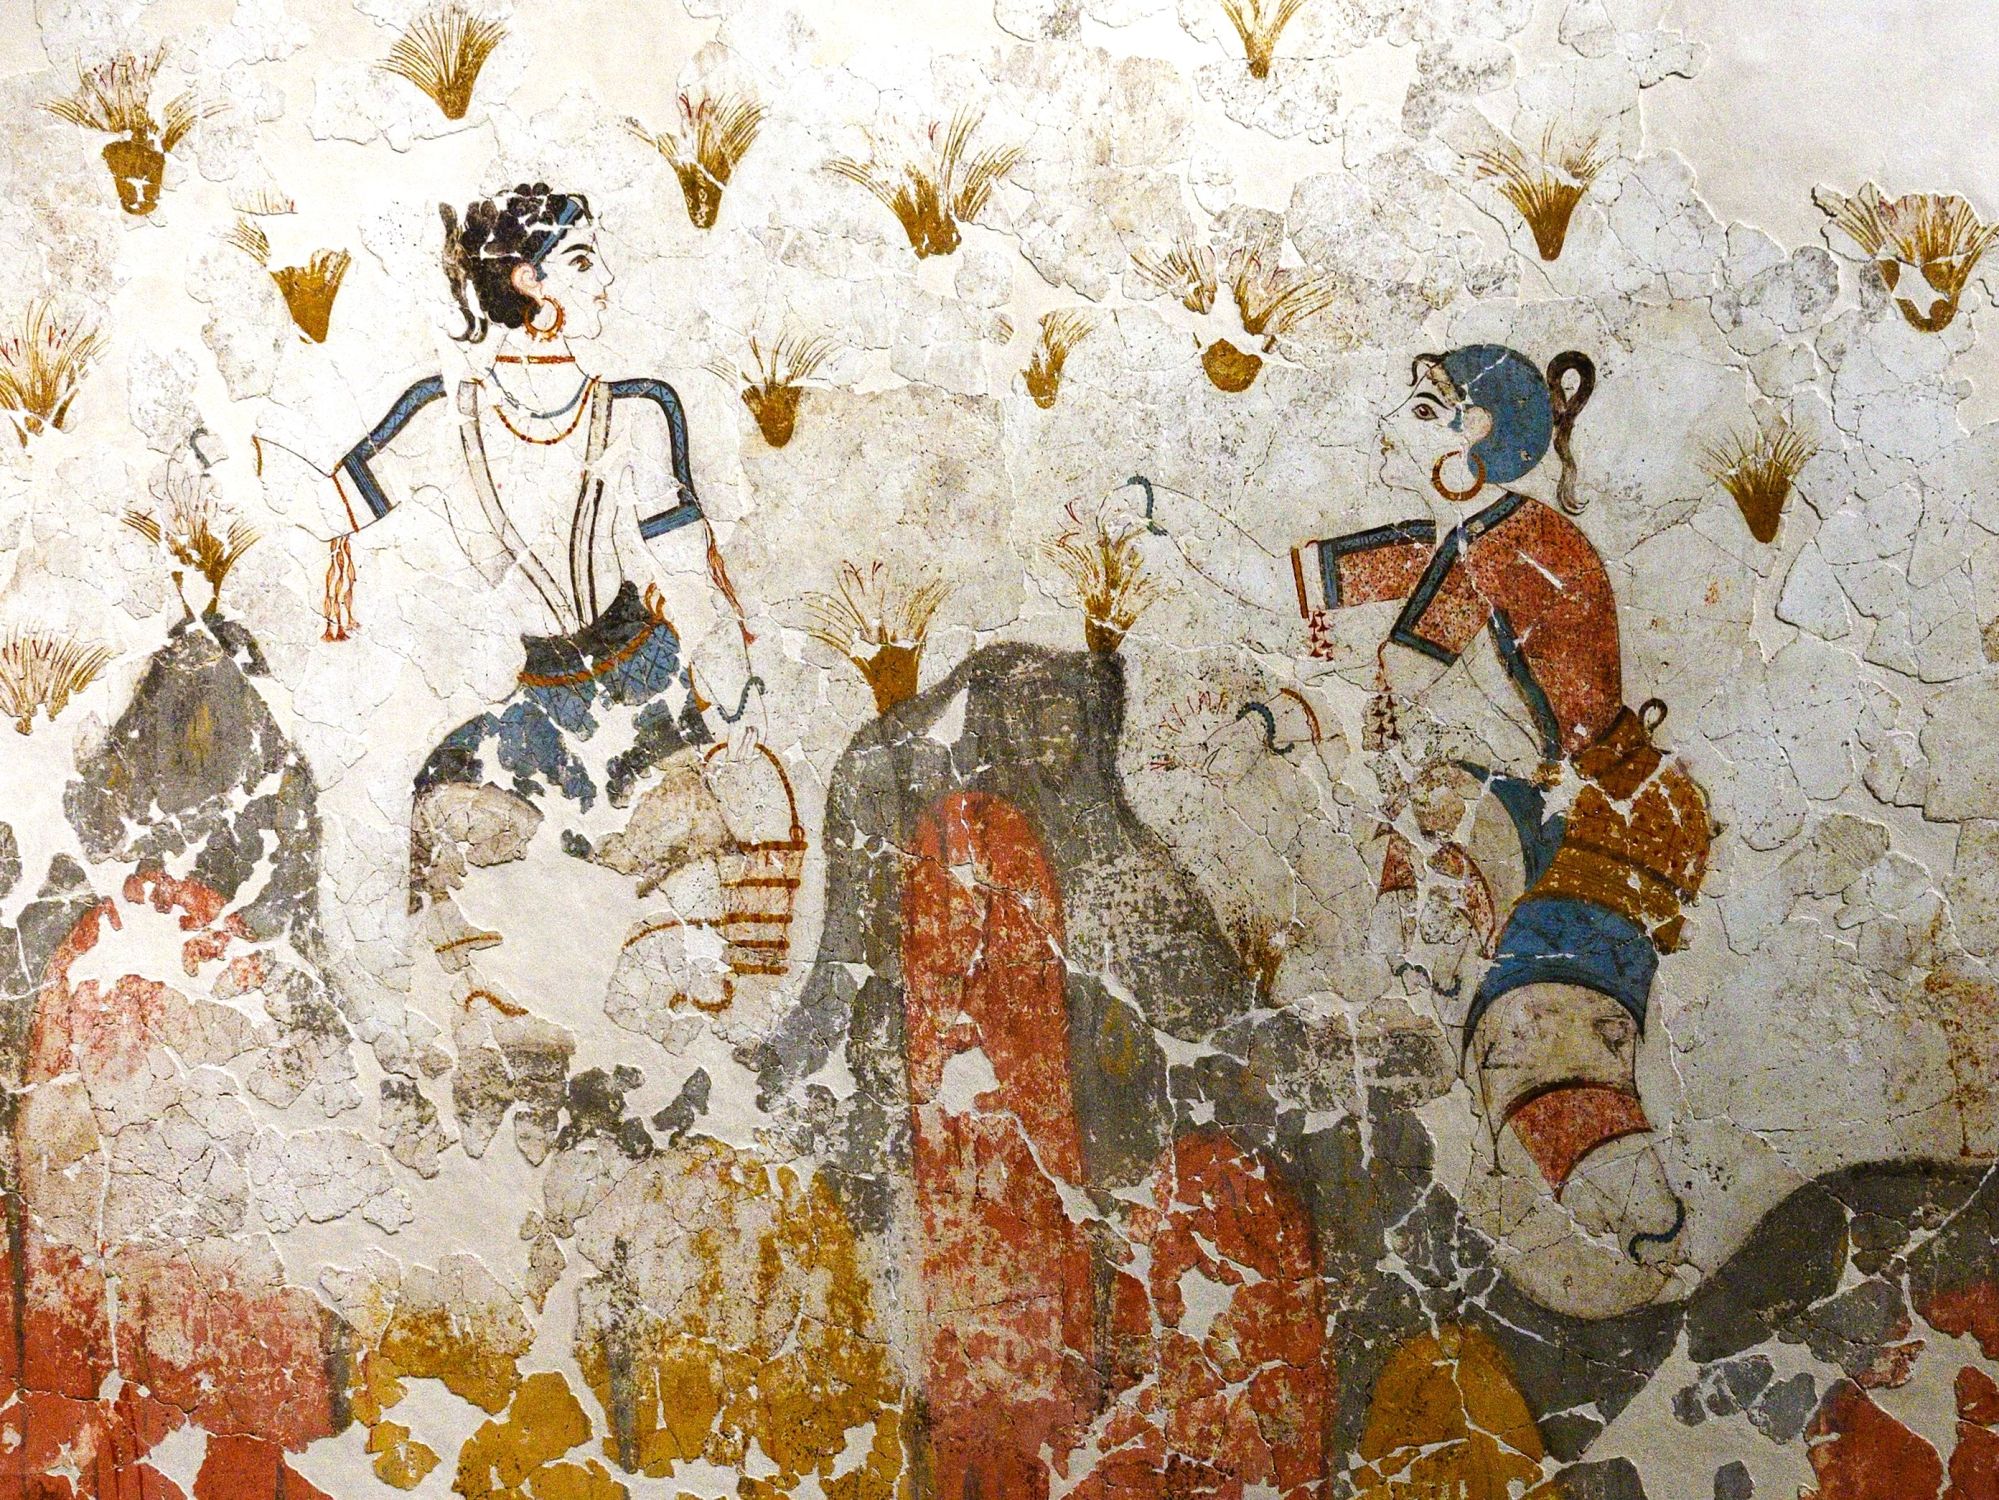 Saffron_gatherers,_fresco_from_Akrotiri,_17th_c_BC,_MPTh,_226310x1.jpg